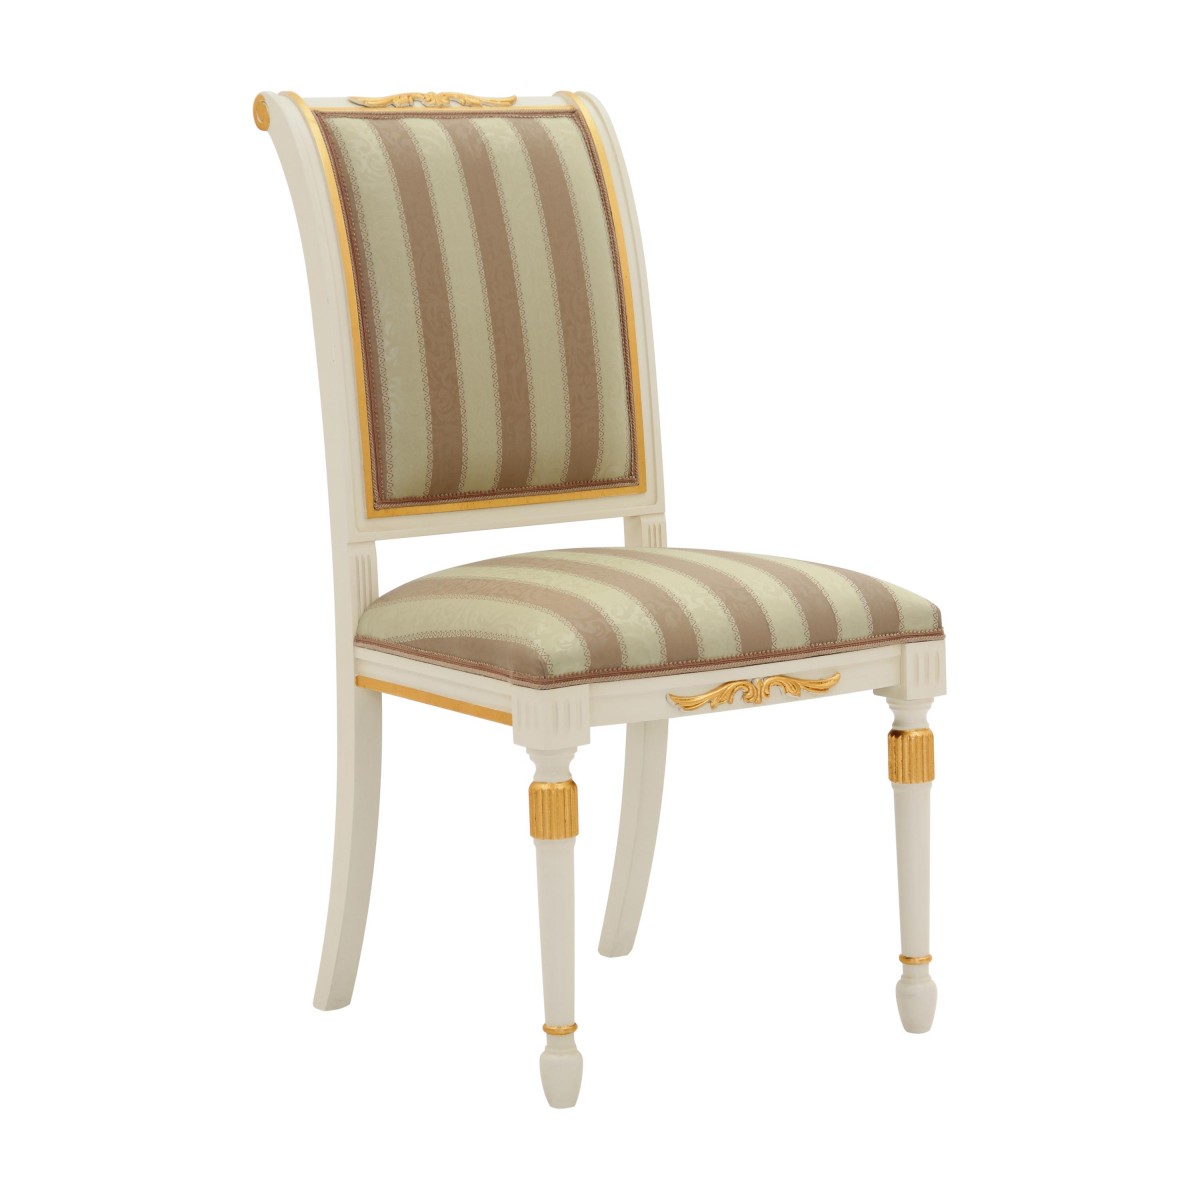 classic chair salgari 3598